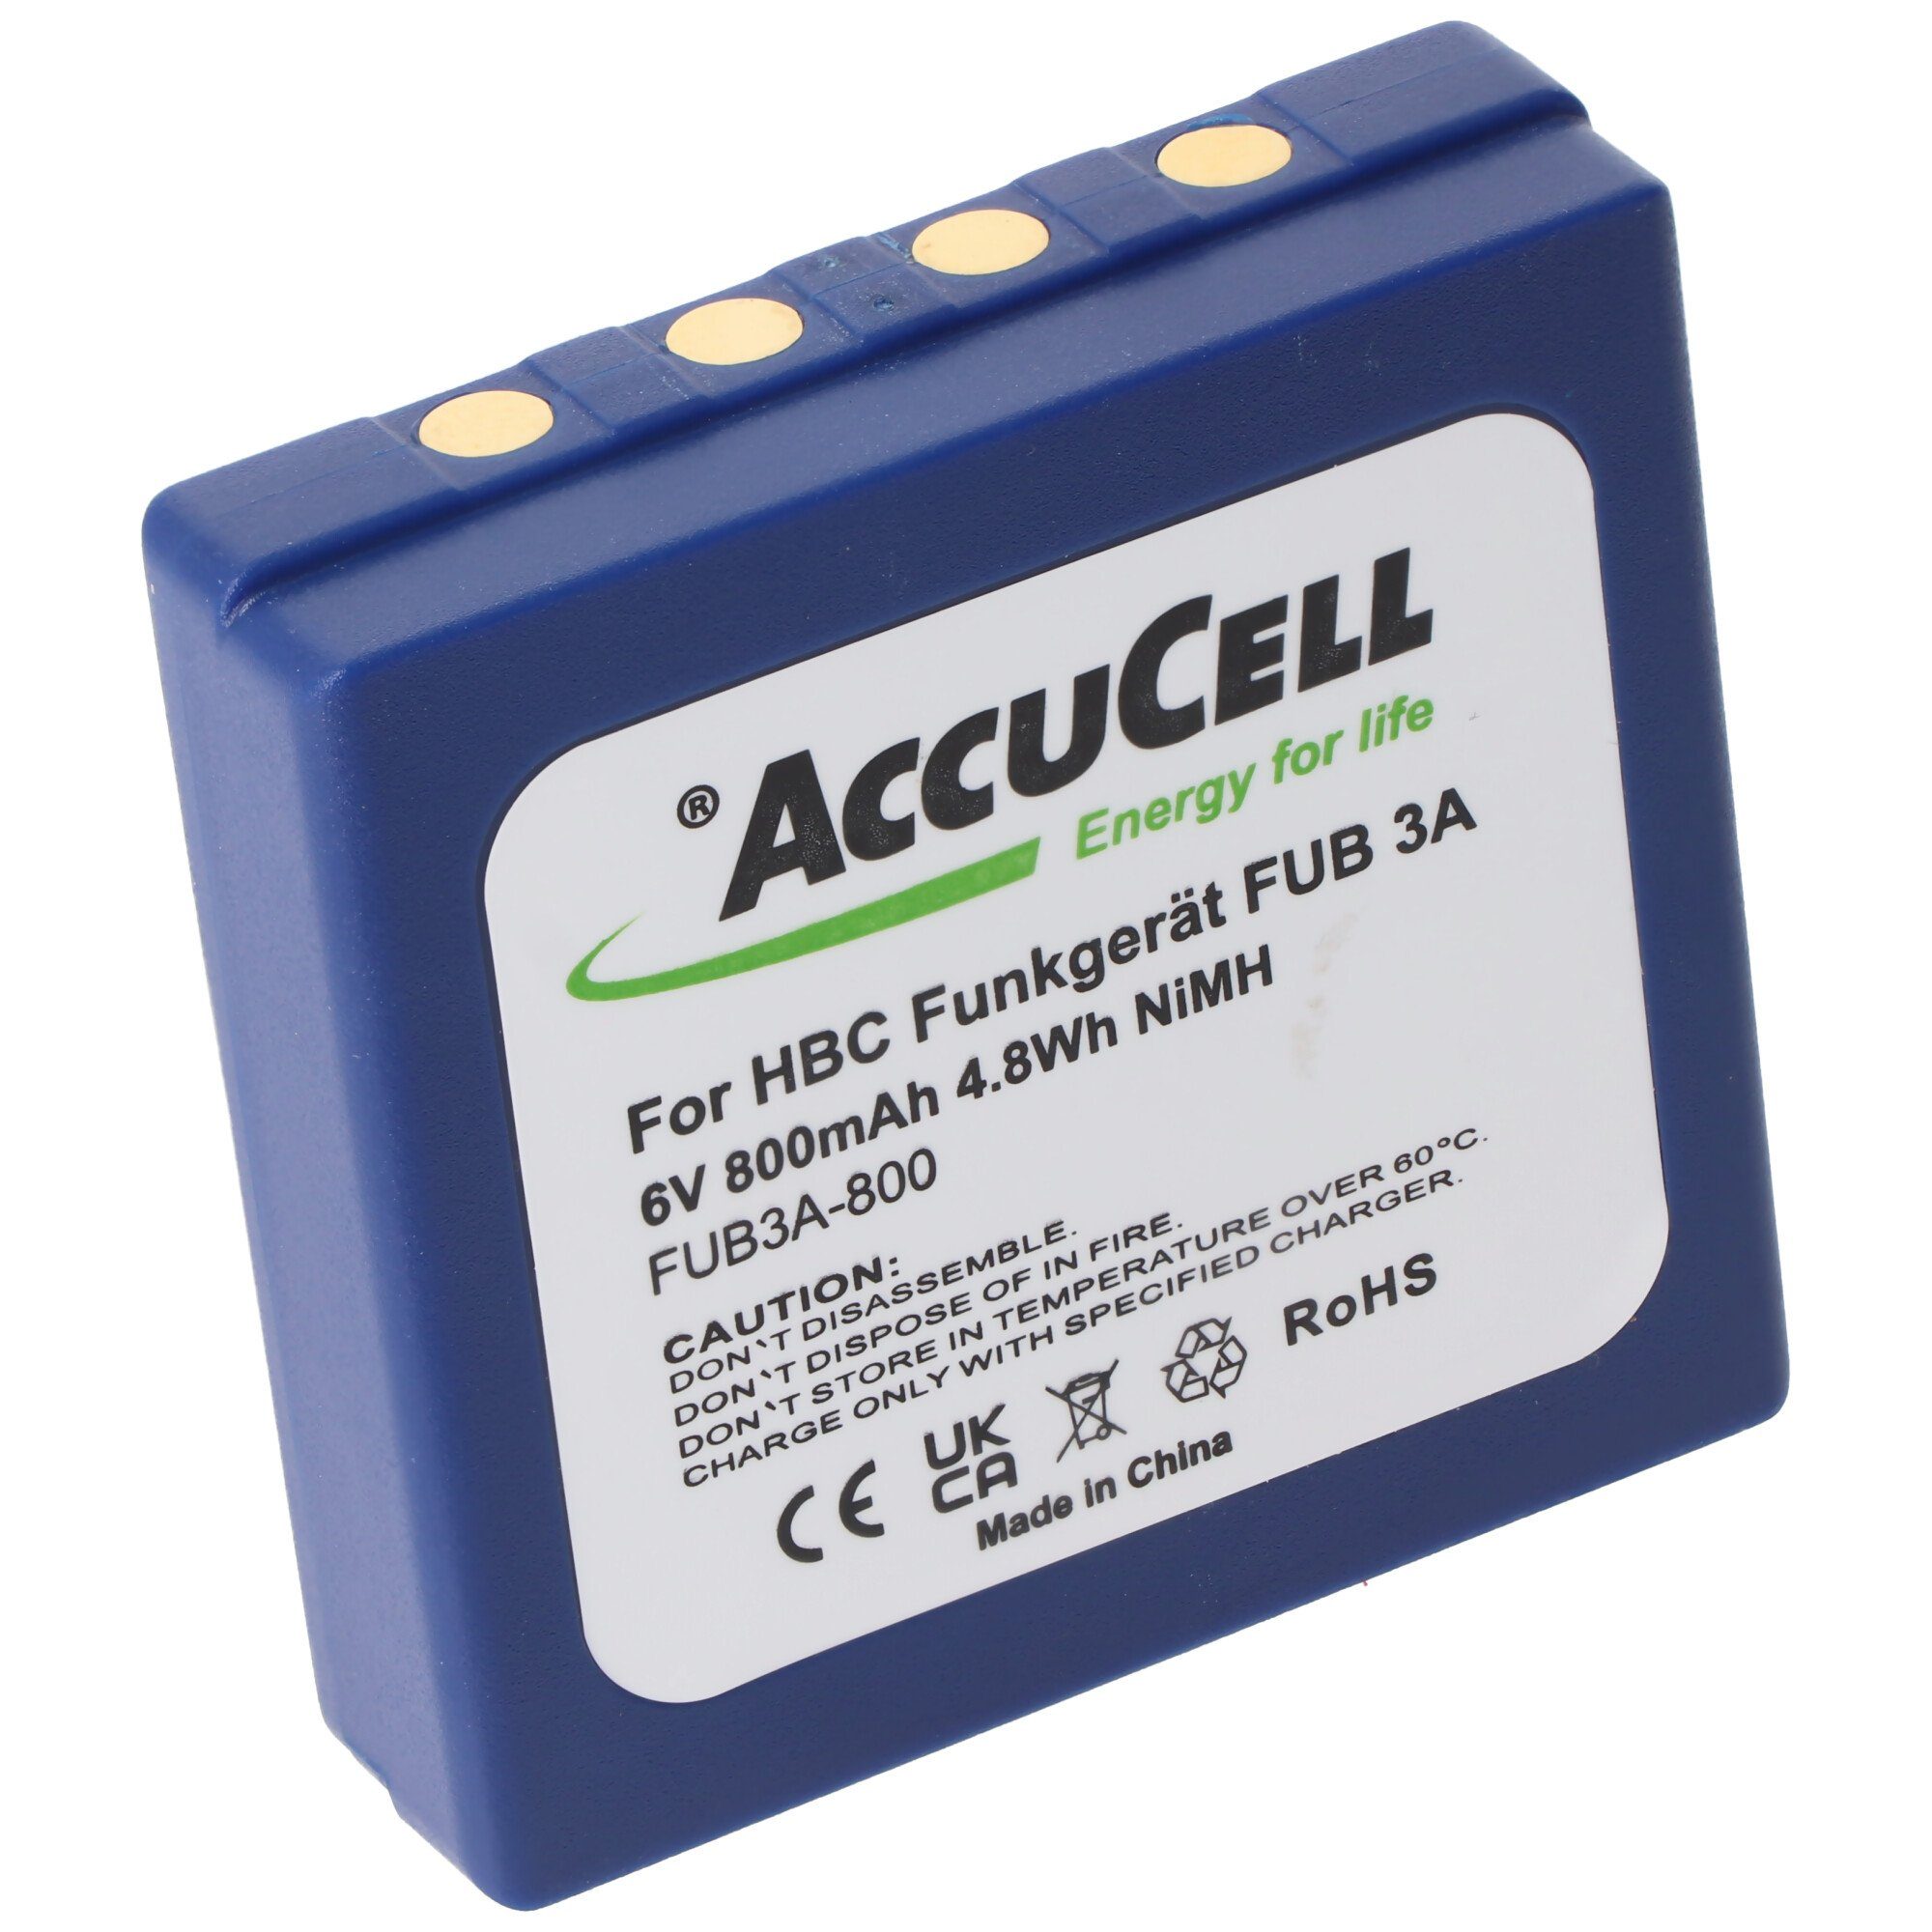 AccuCell 800mAh Akku passend für HBC Funkgerät FUB 3A Akku BA203060, BA222060, Akku 800 mAh (6,0 V)